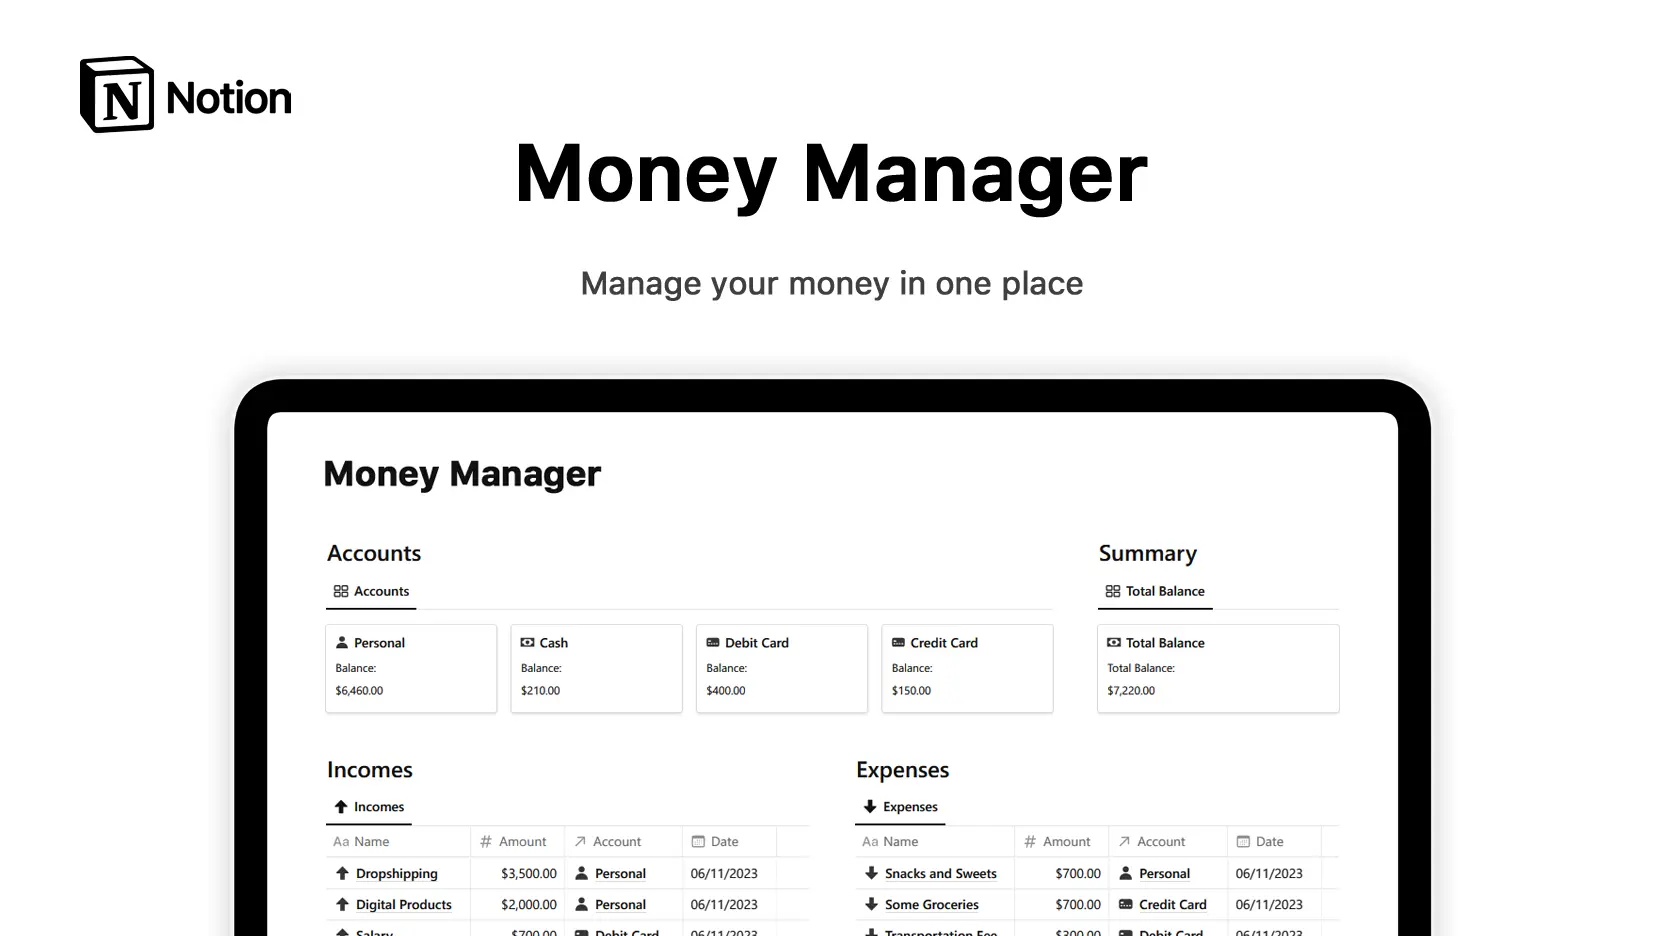 Money Manager image